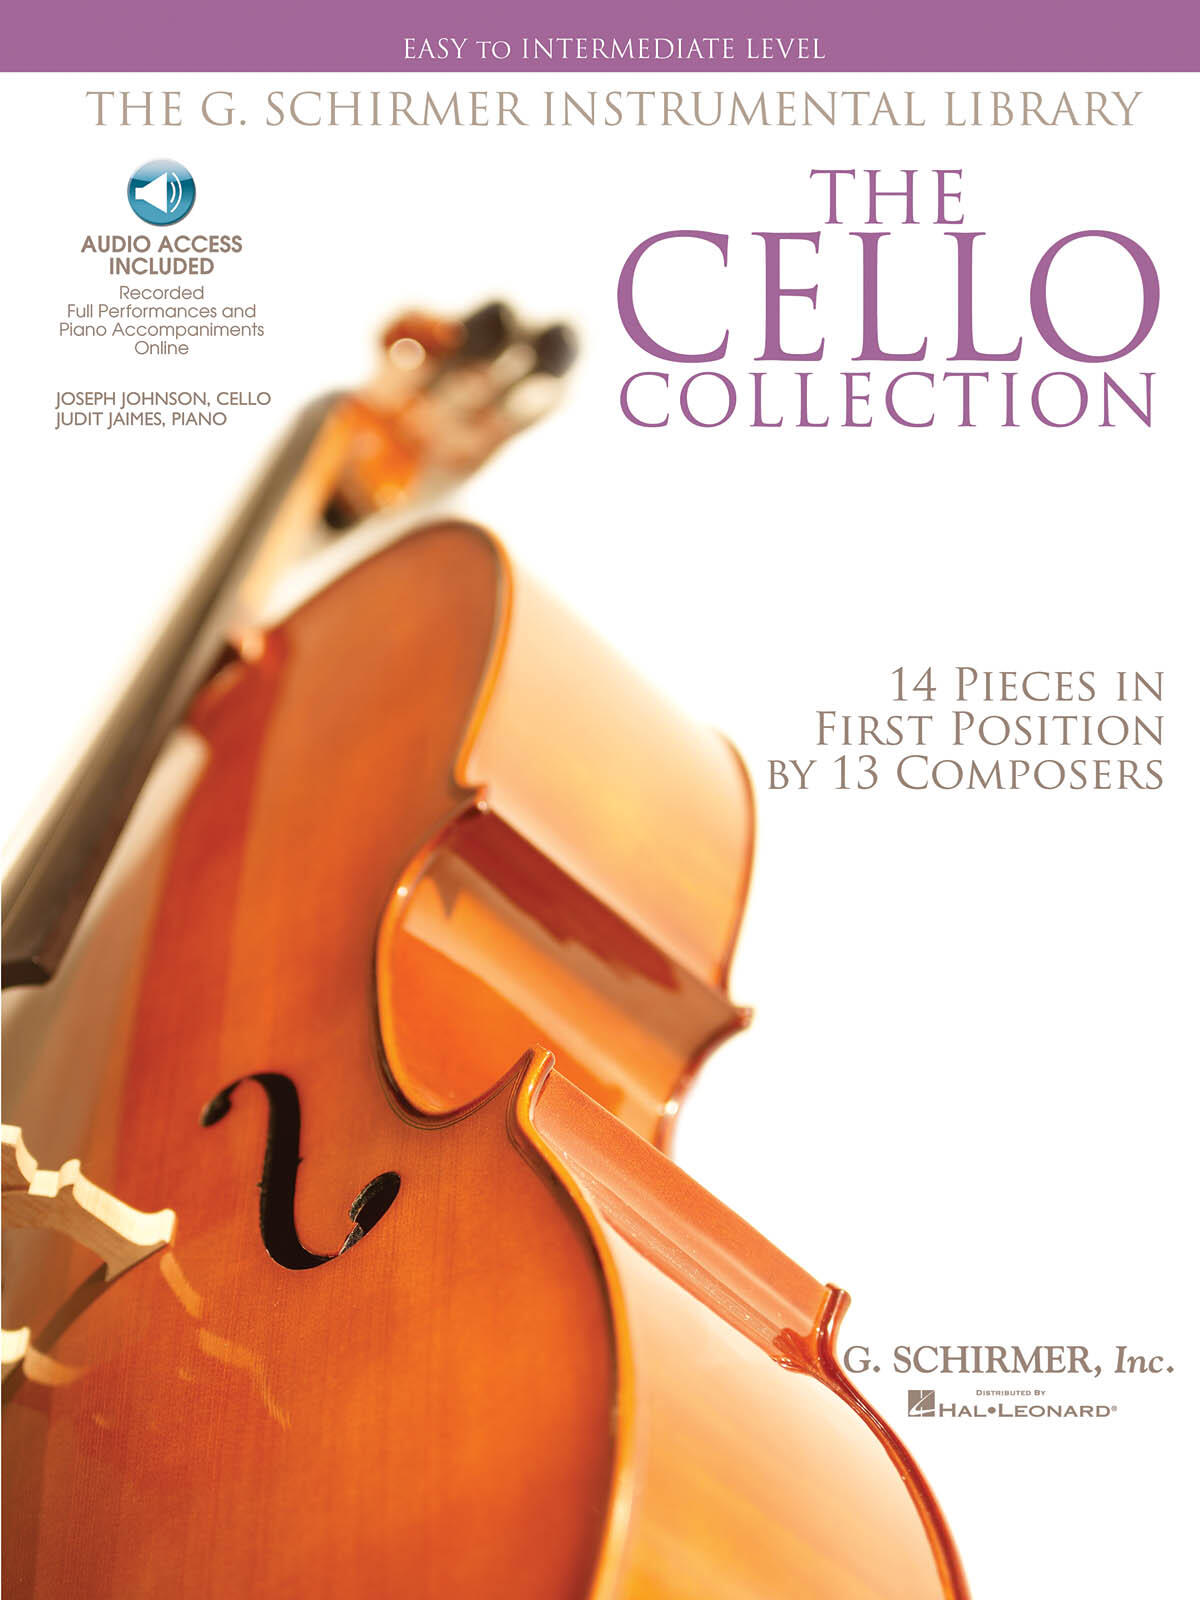 The Cello Collection Easy to Intermediate Level : photo 1